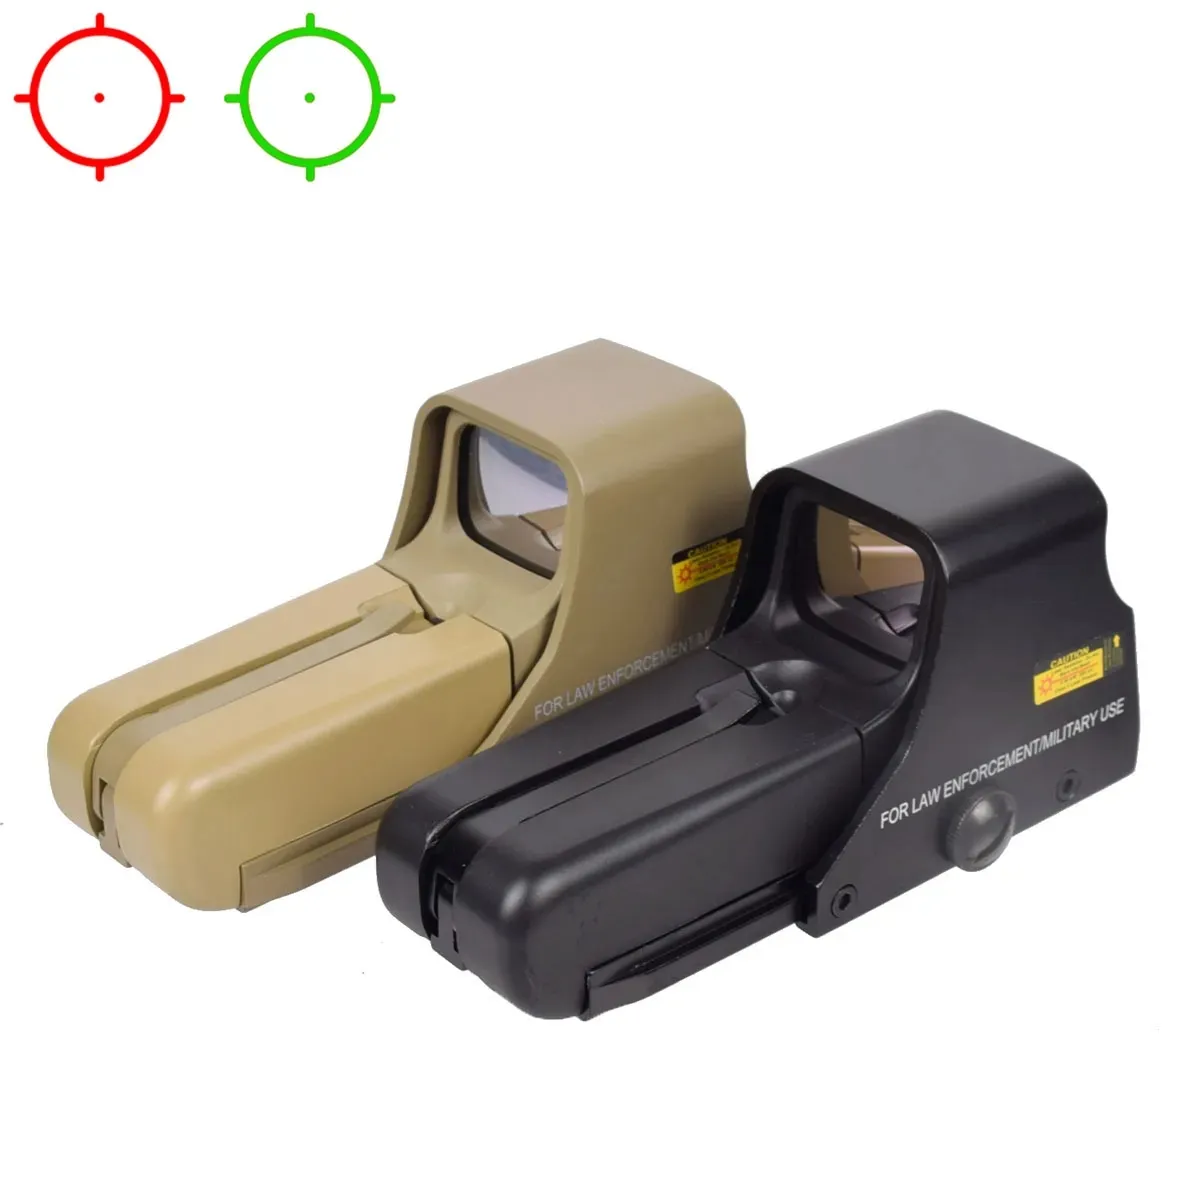 551 552 553 Holographic Green Red Dot Sight Optics Night Vision Gun Rifle Scope 20mm Rail Mount for HK416 AR15-Black